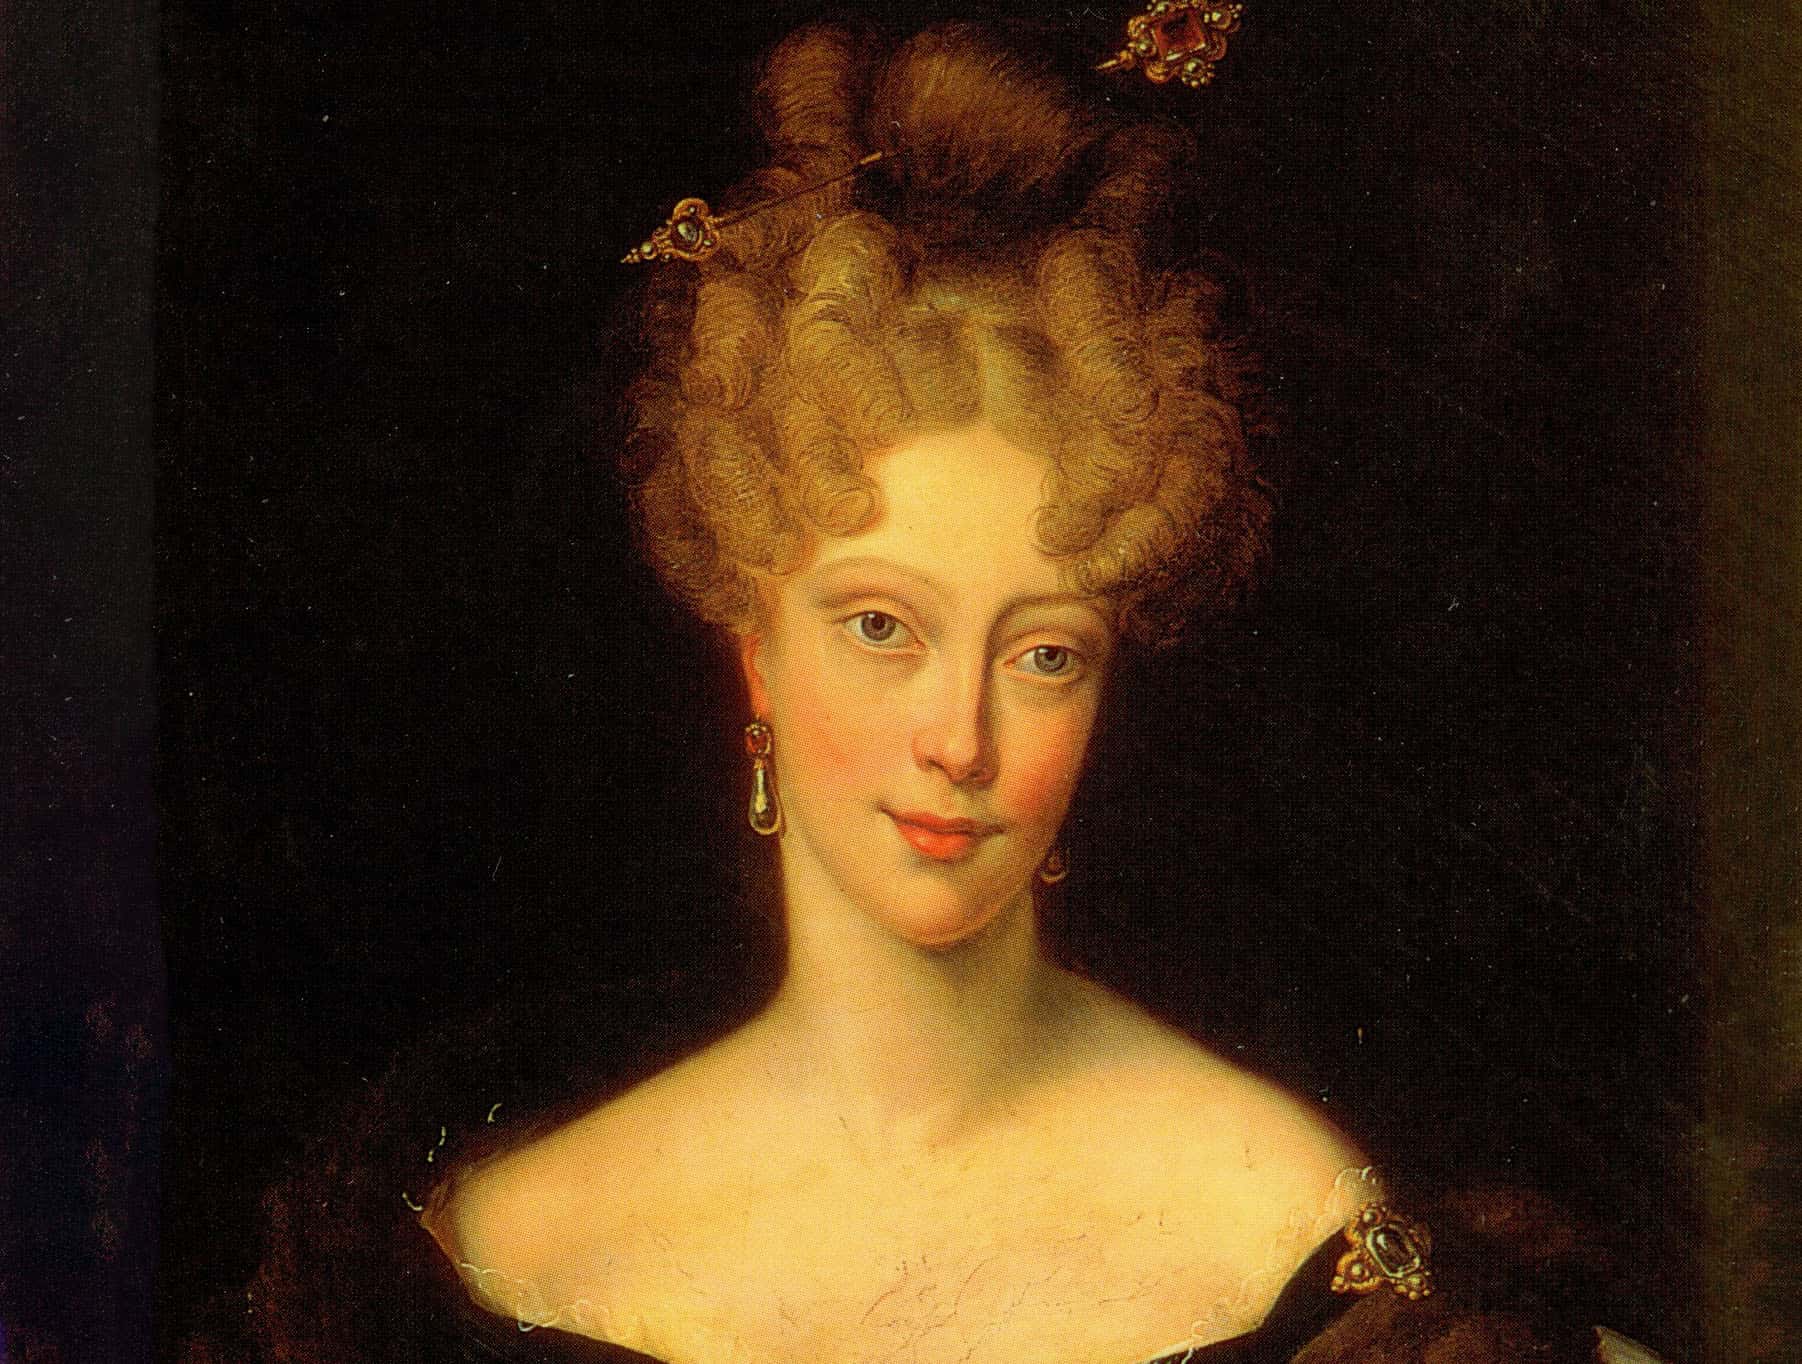 Marie-Caroline, Duchess of Berry facts